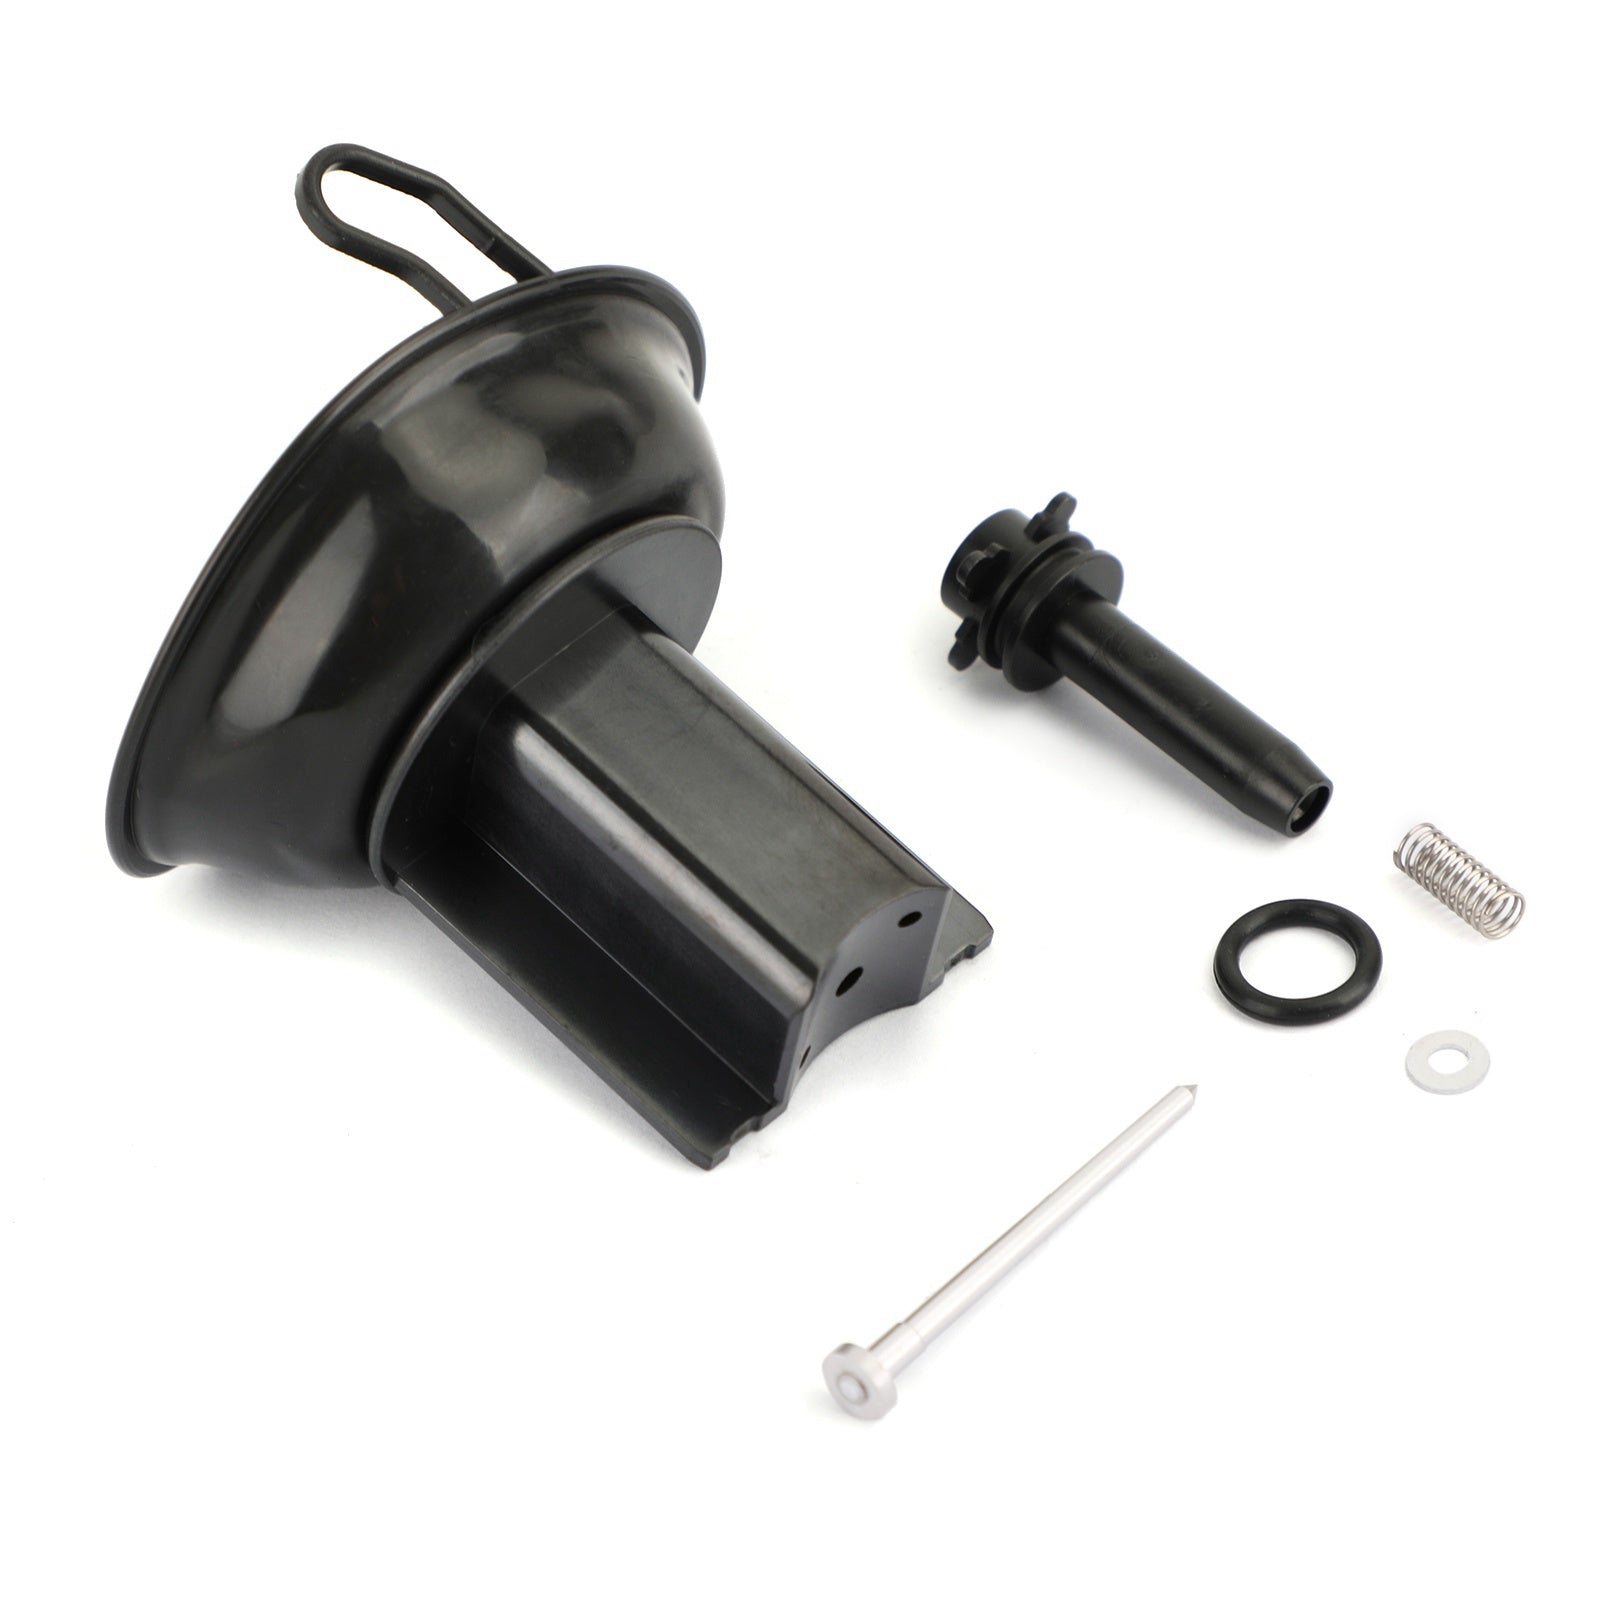 1x Moto Carburetor repair kit plunger diaphragm for Honda CB400 VTEC CB 400